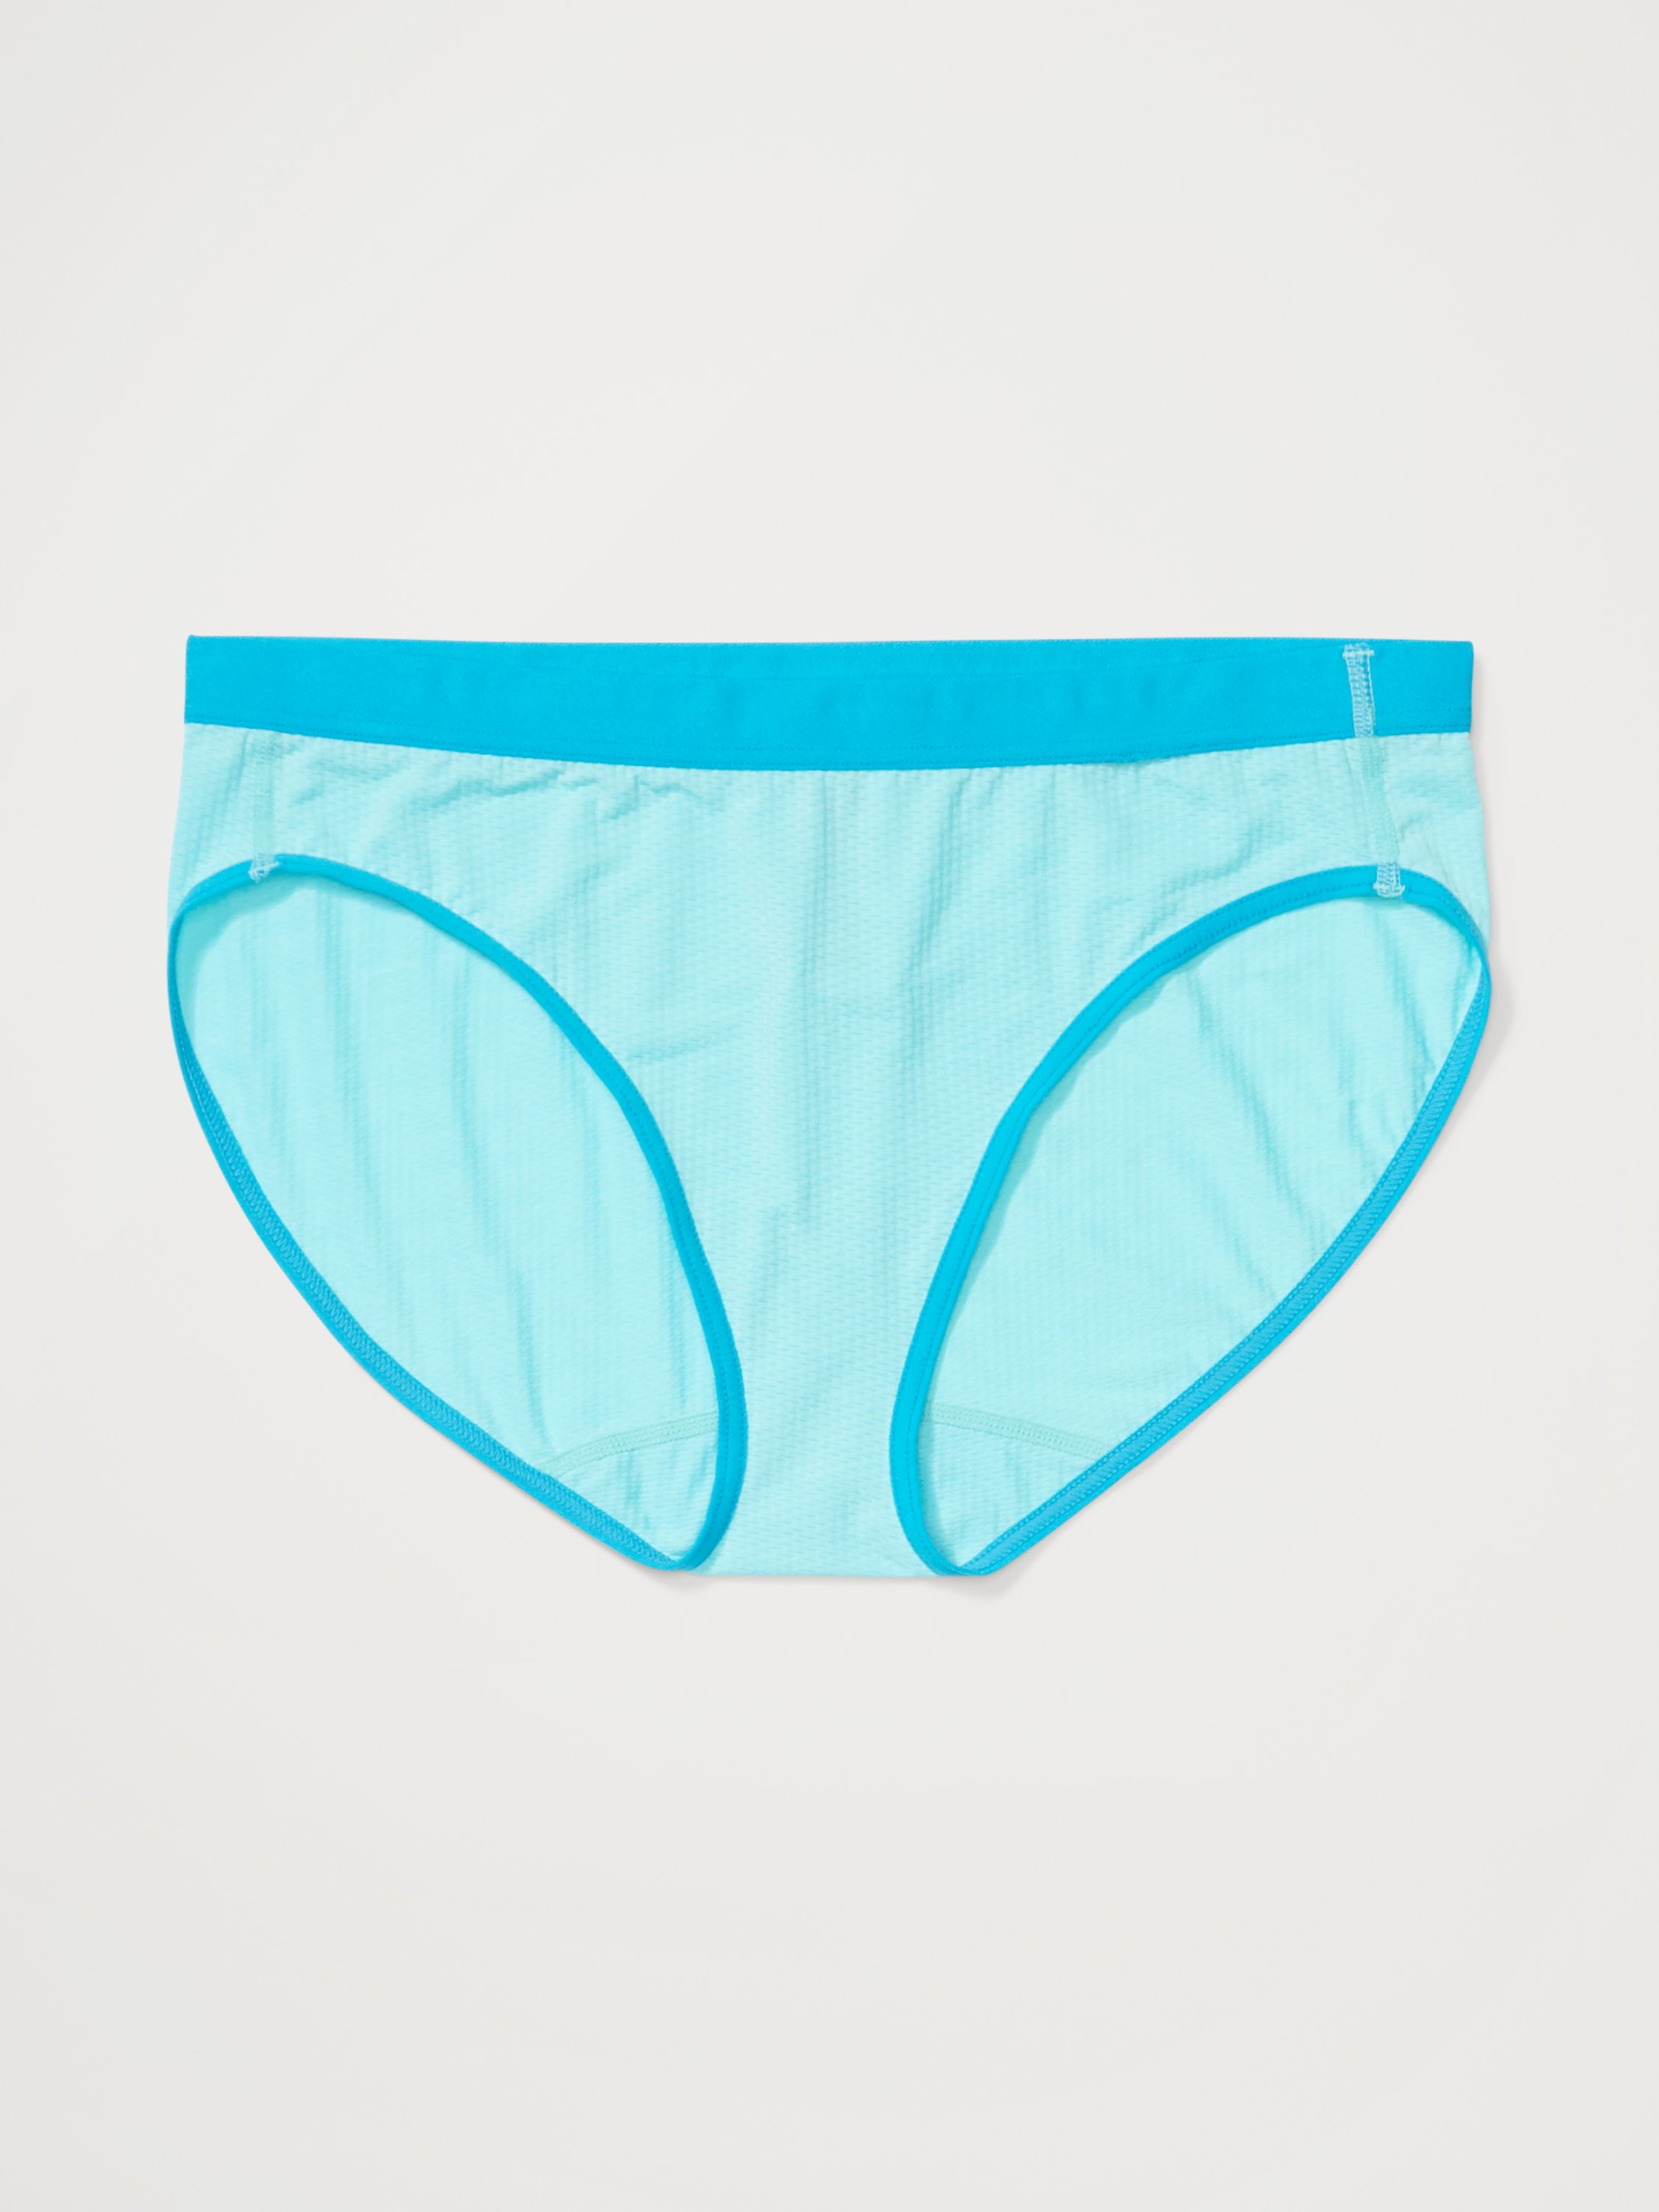 ExOfficio Give-N-Go 2.0 Sport Thong Underwear - Women's - Women